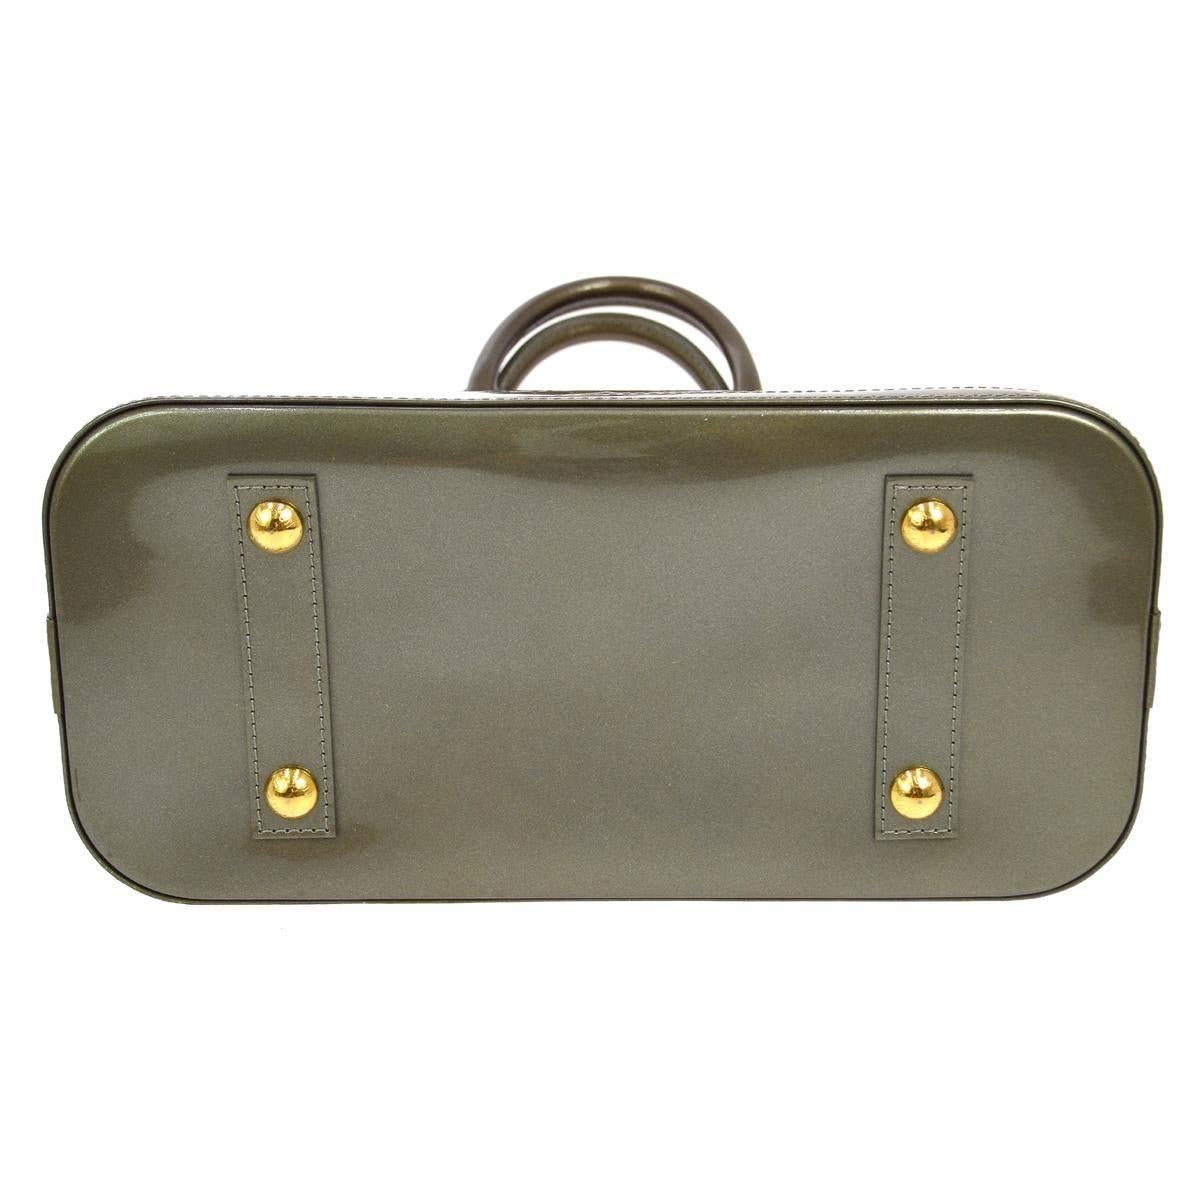 Brown Louis Vuitton Monogram Patent Leather Top Handle Satchel Bag with Lock & Keys